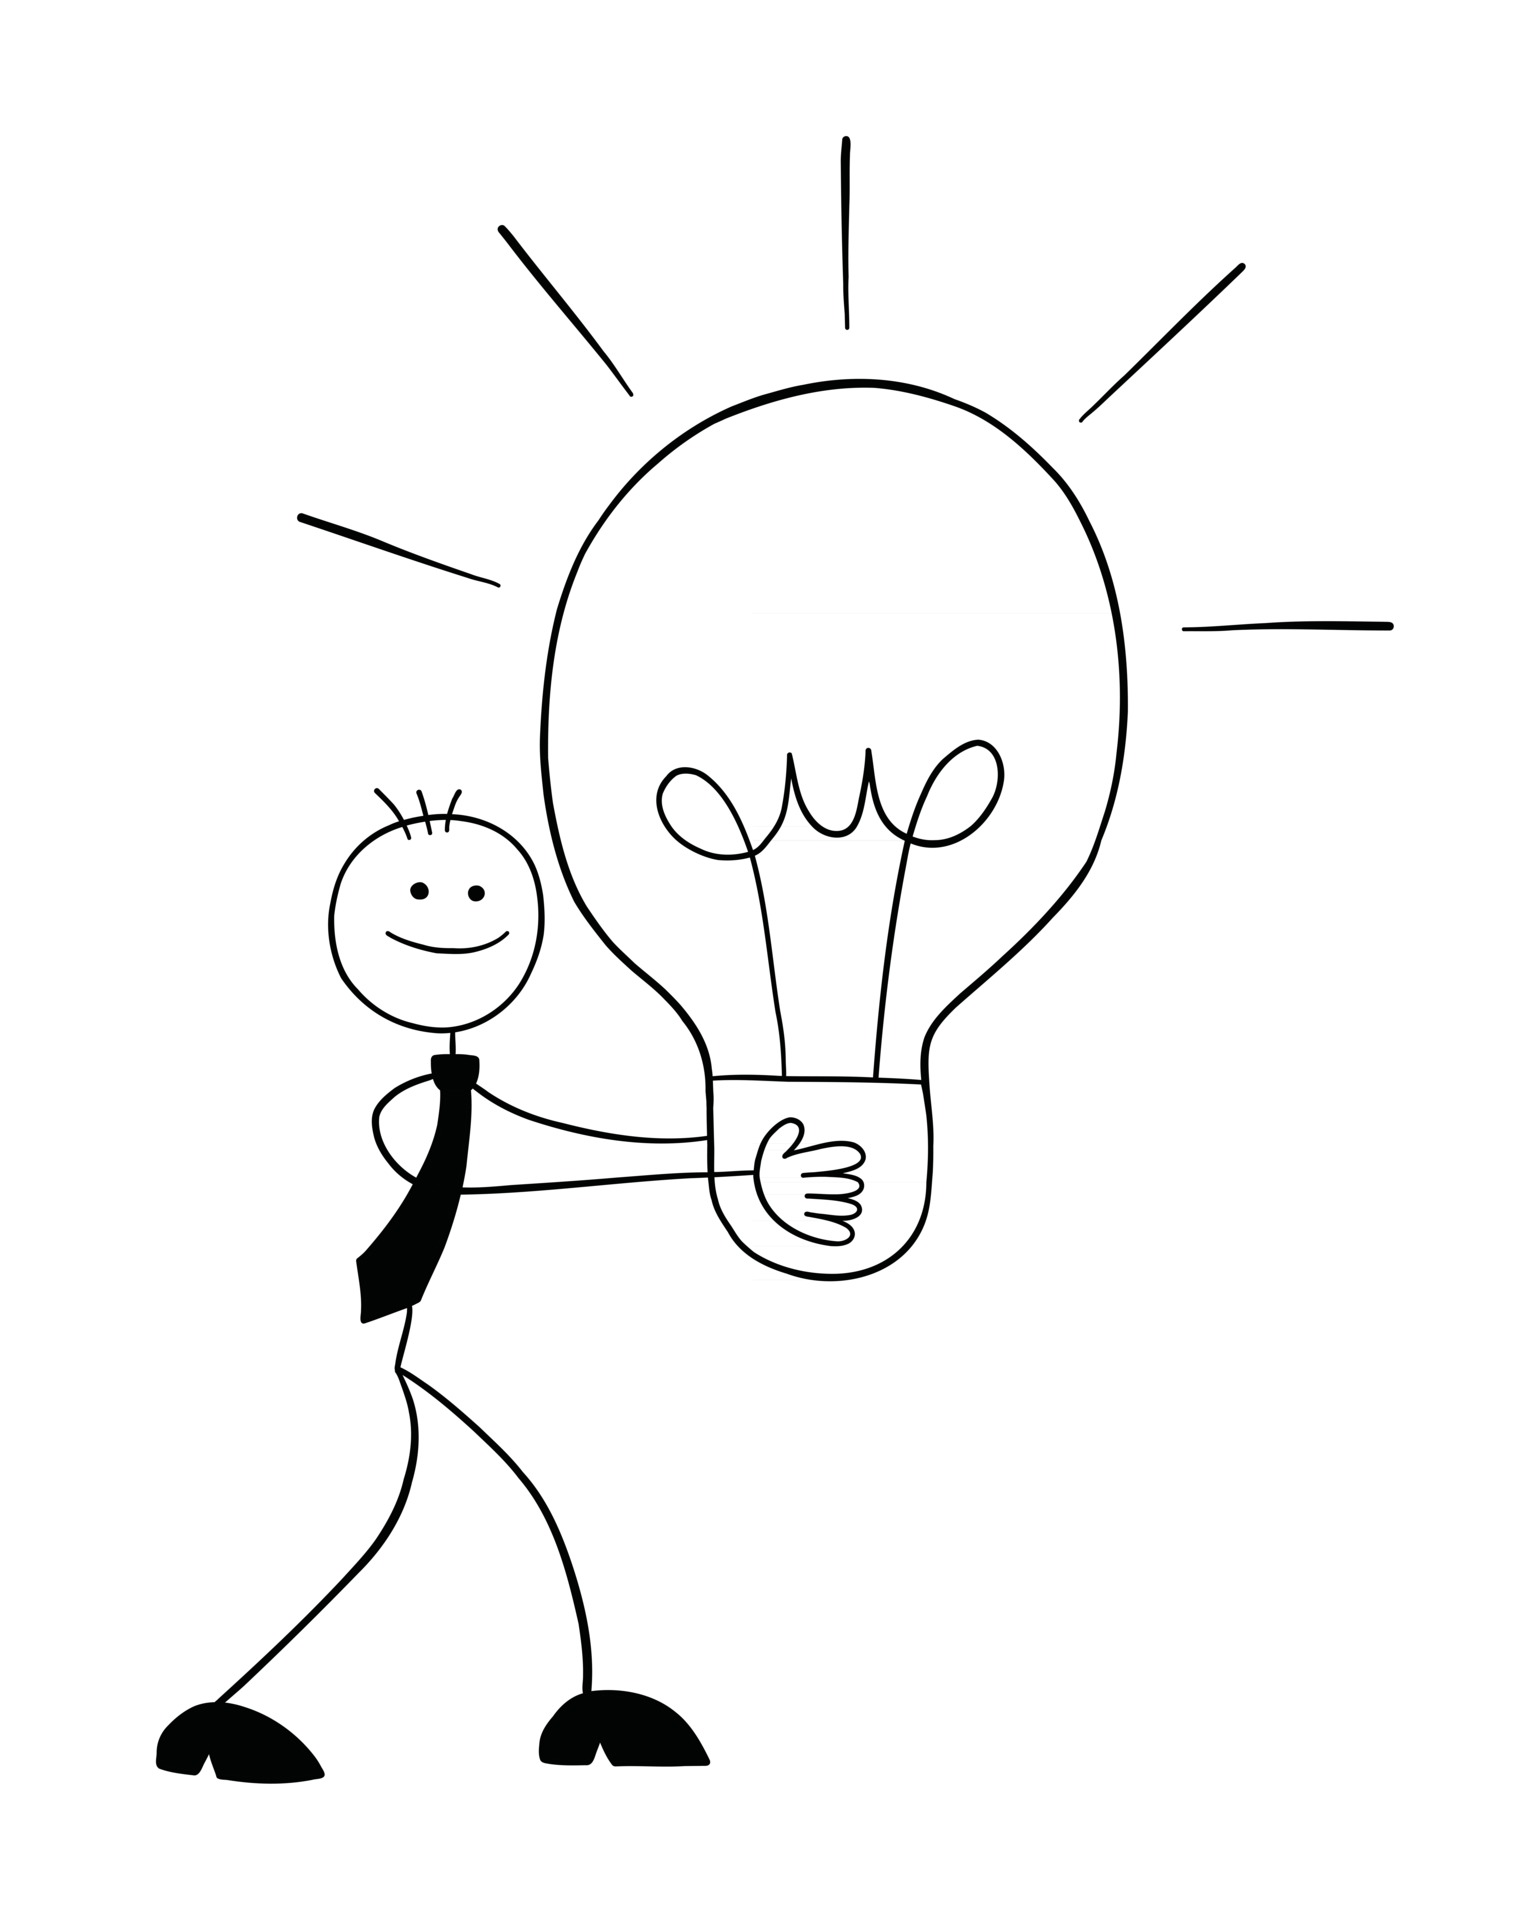 Stickman Businessman Character Walking and Carrying a Light Bulb Idea  Vector Cartoon Illustration 2889572 Vector Art at Vecteezy